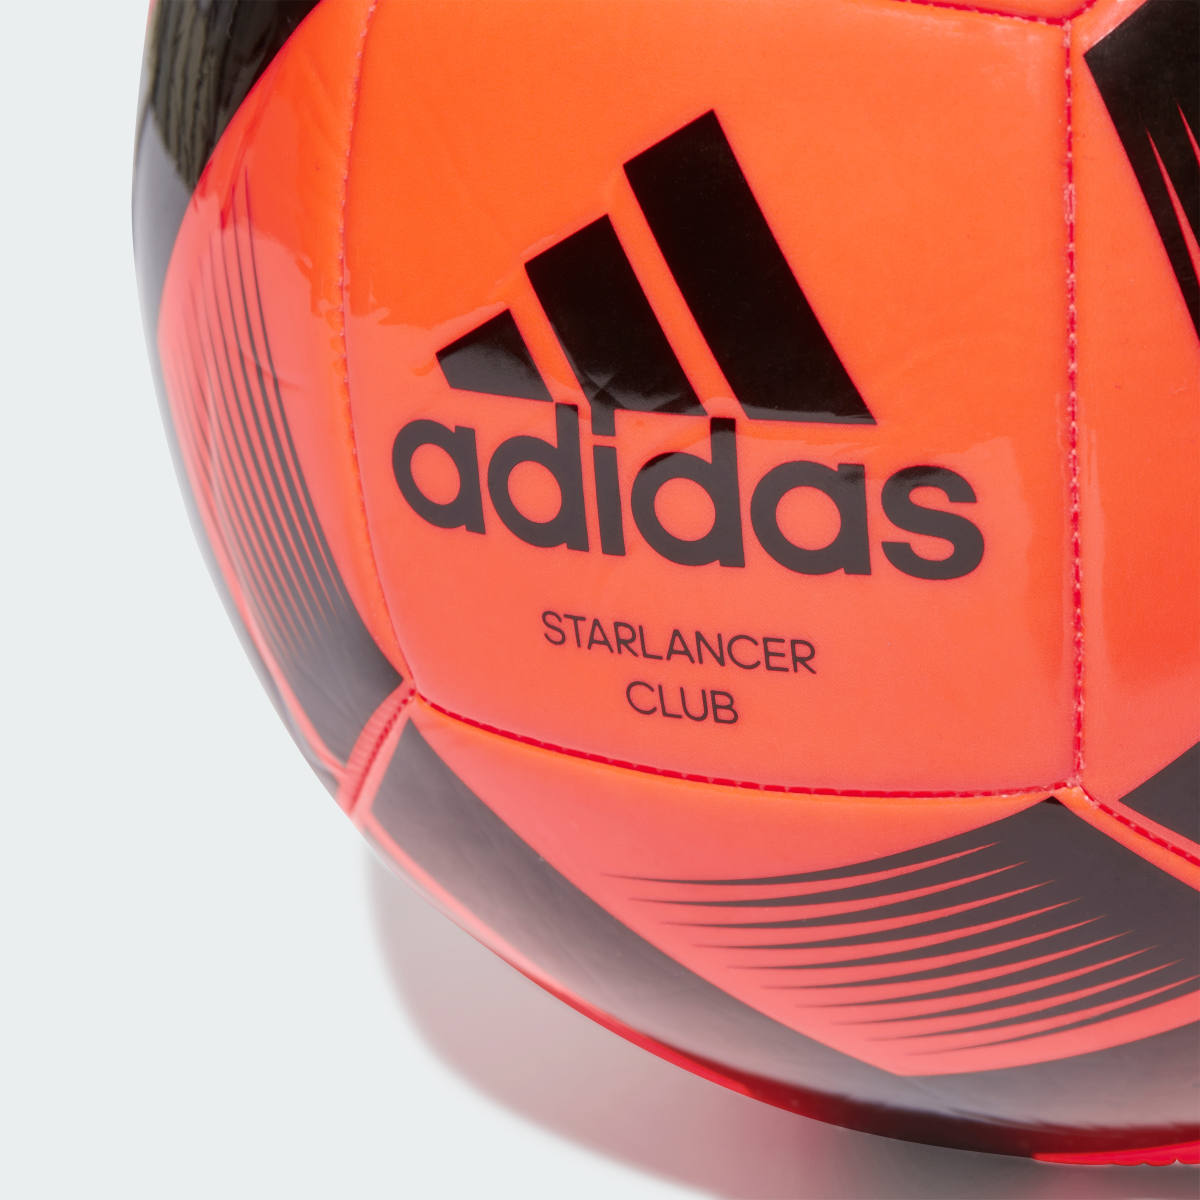 Adidas Starlancer Club Football. 4